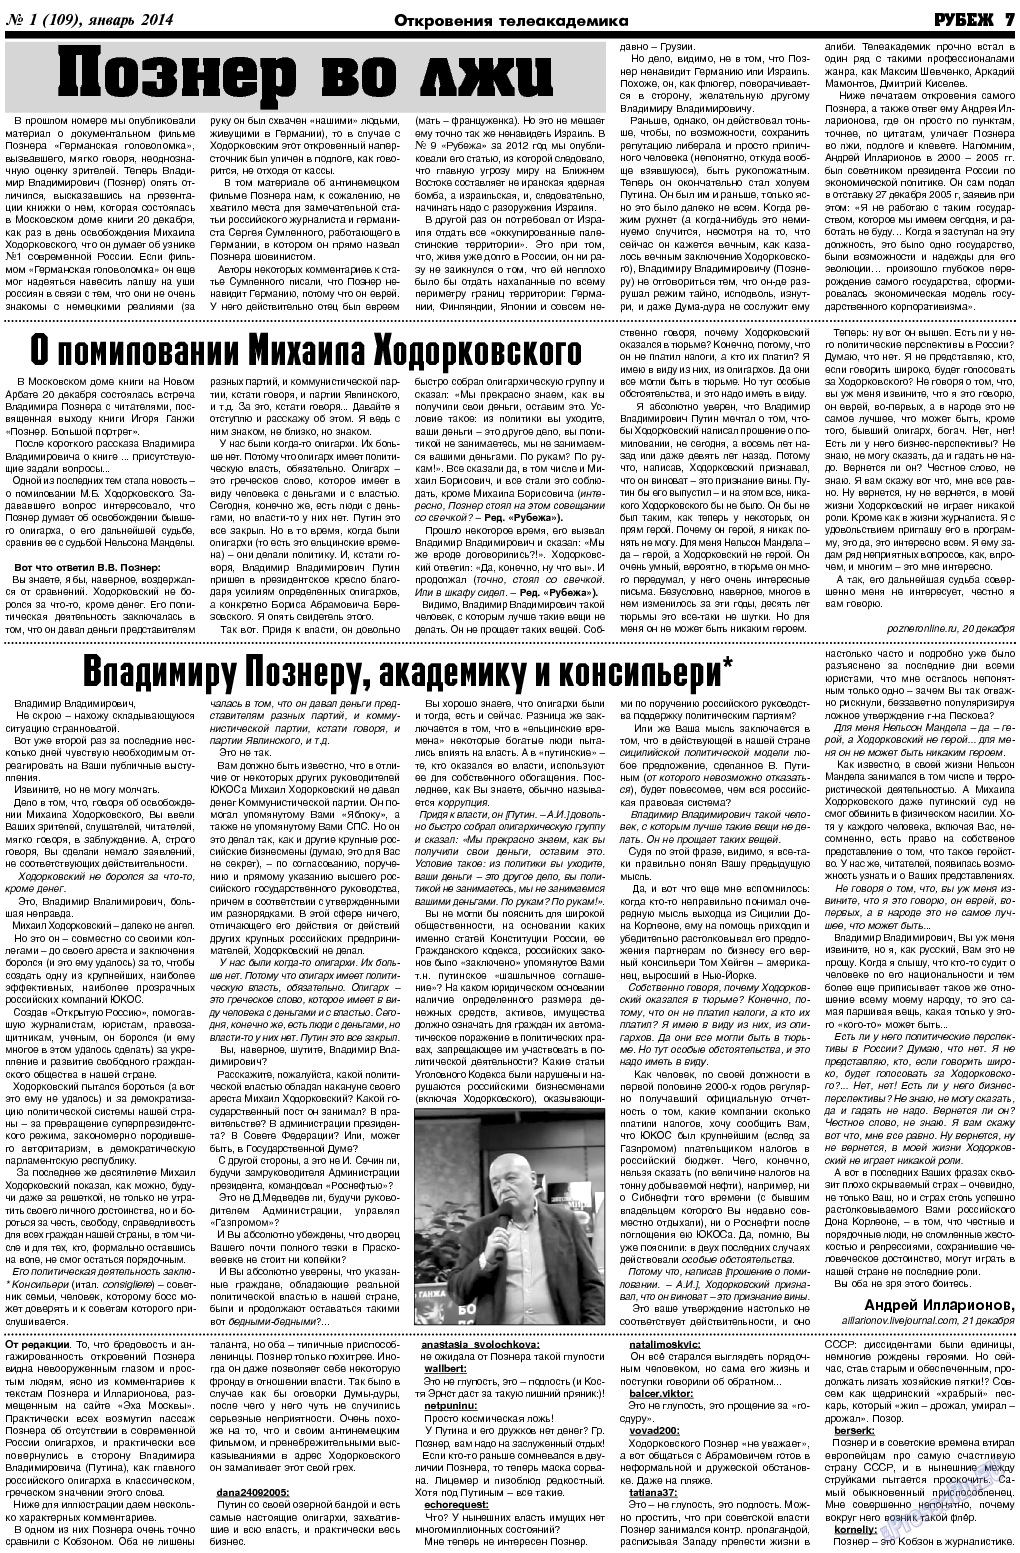 Рубеж, газета. 2014 №1 стр.7